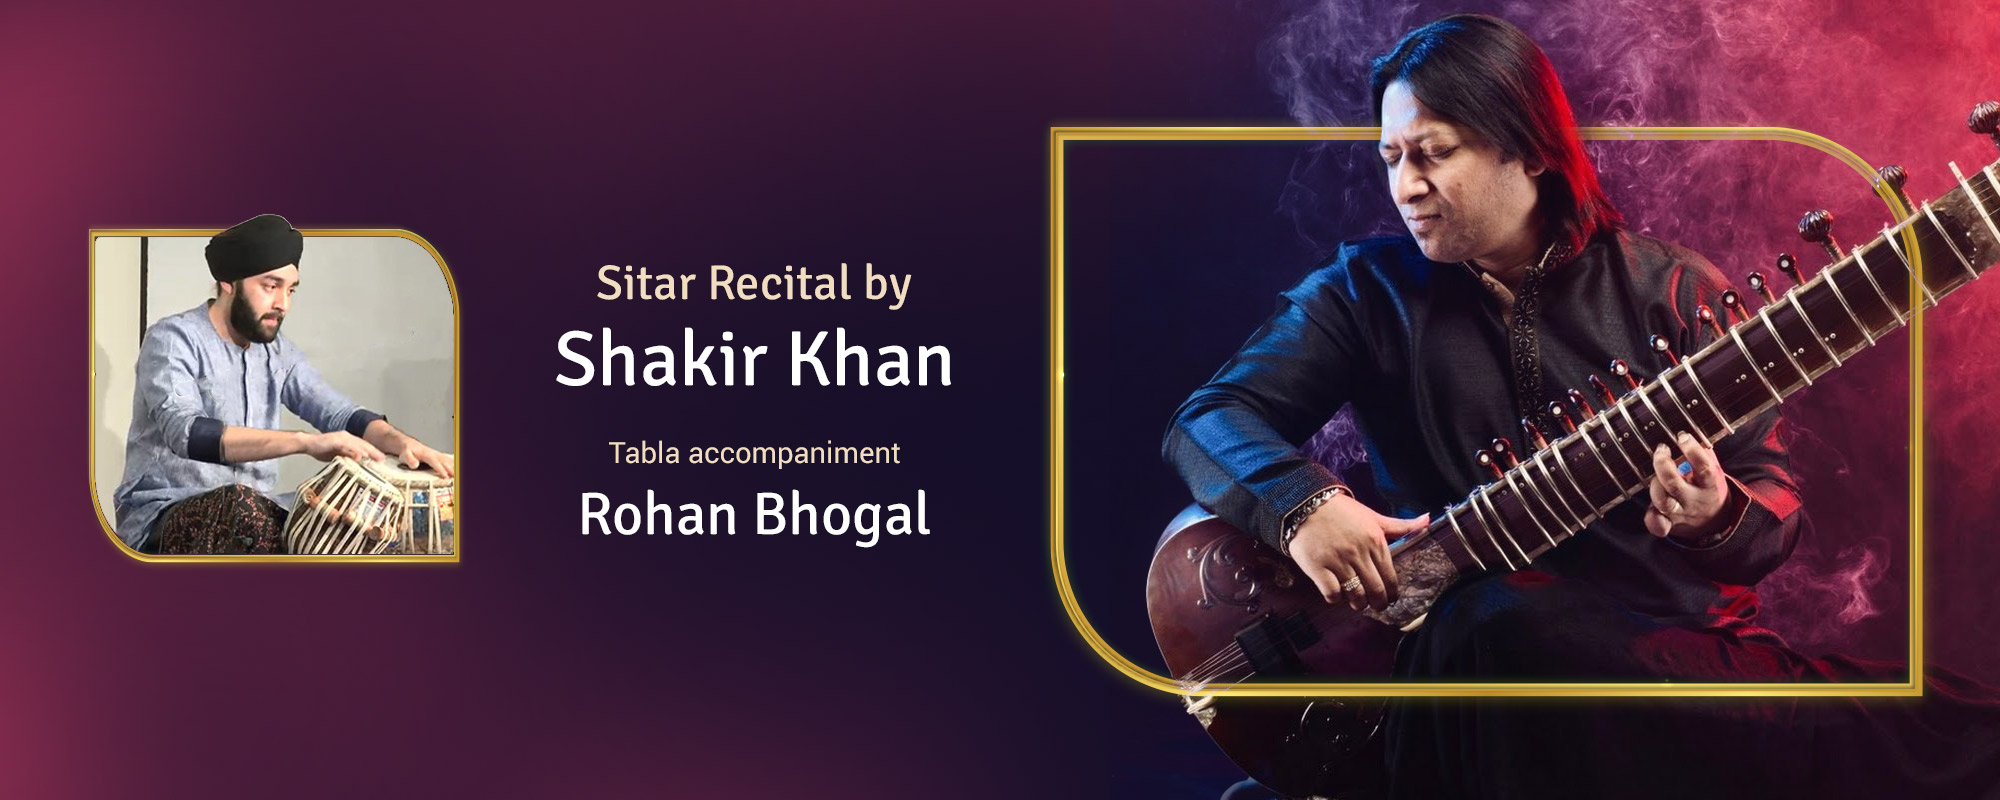 Shakir Khan with Rohan Bhogal concert